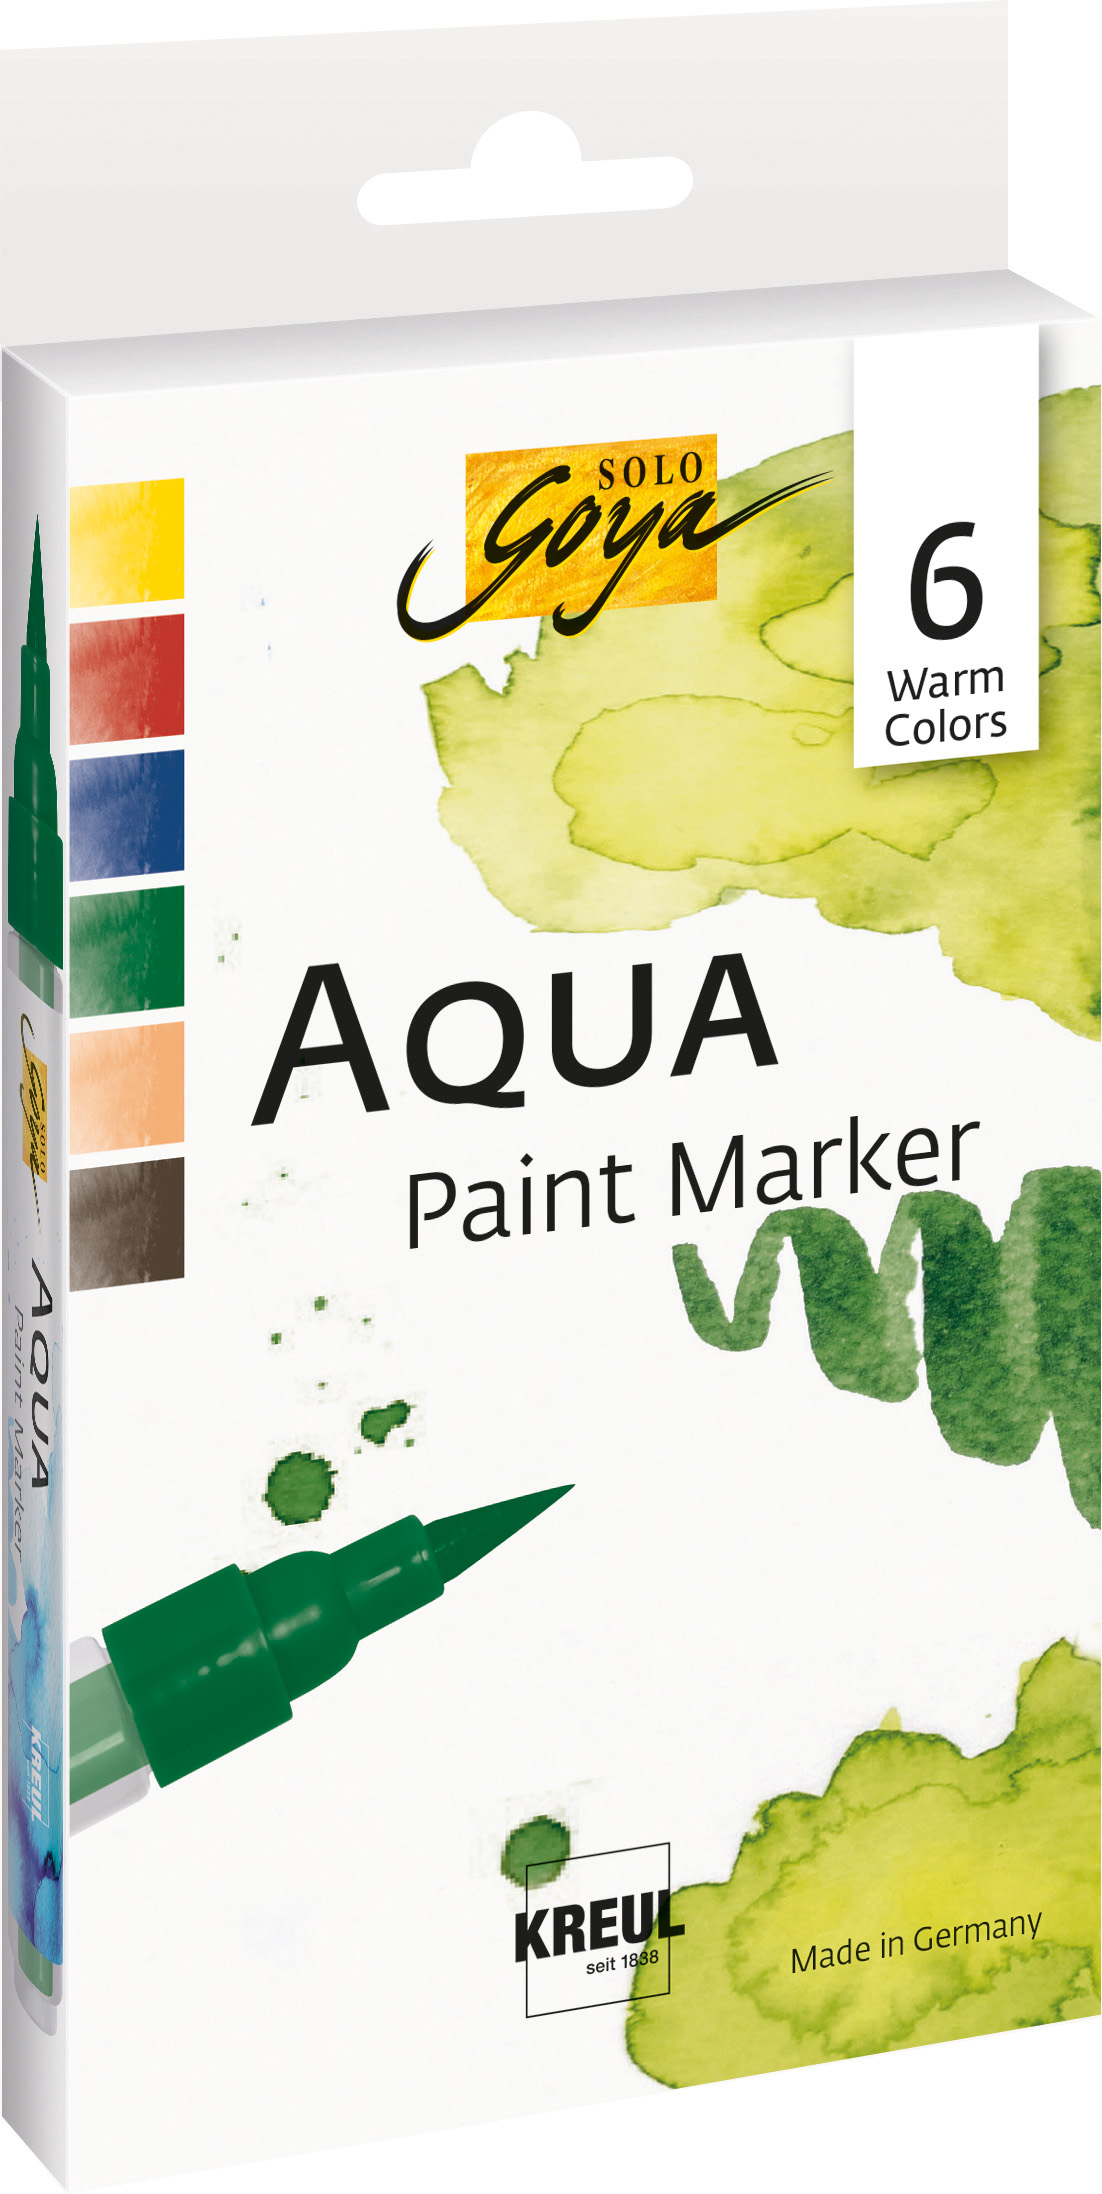 KREUL Solo Goya Aqua Paint Marker warm colors 6er Set Nettopreis